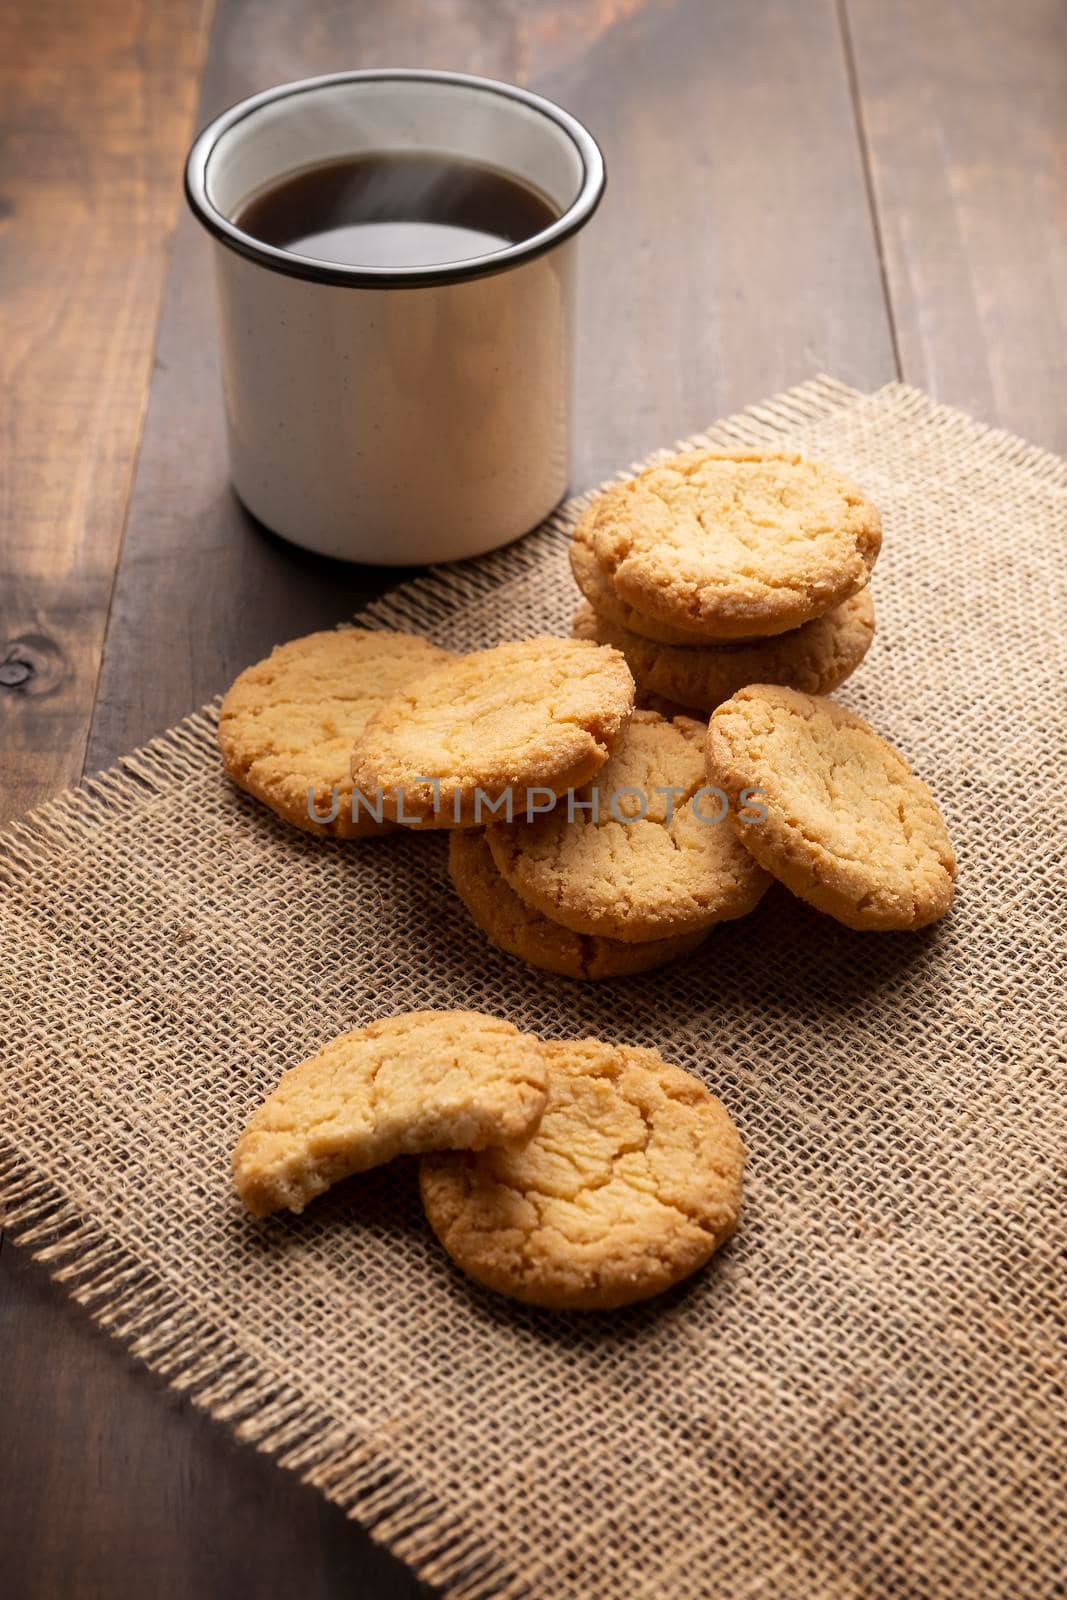 Homemade cookies ans coffee by hayaship